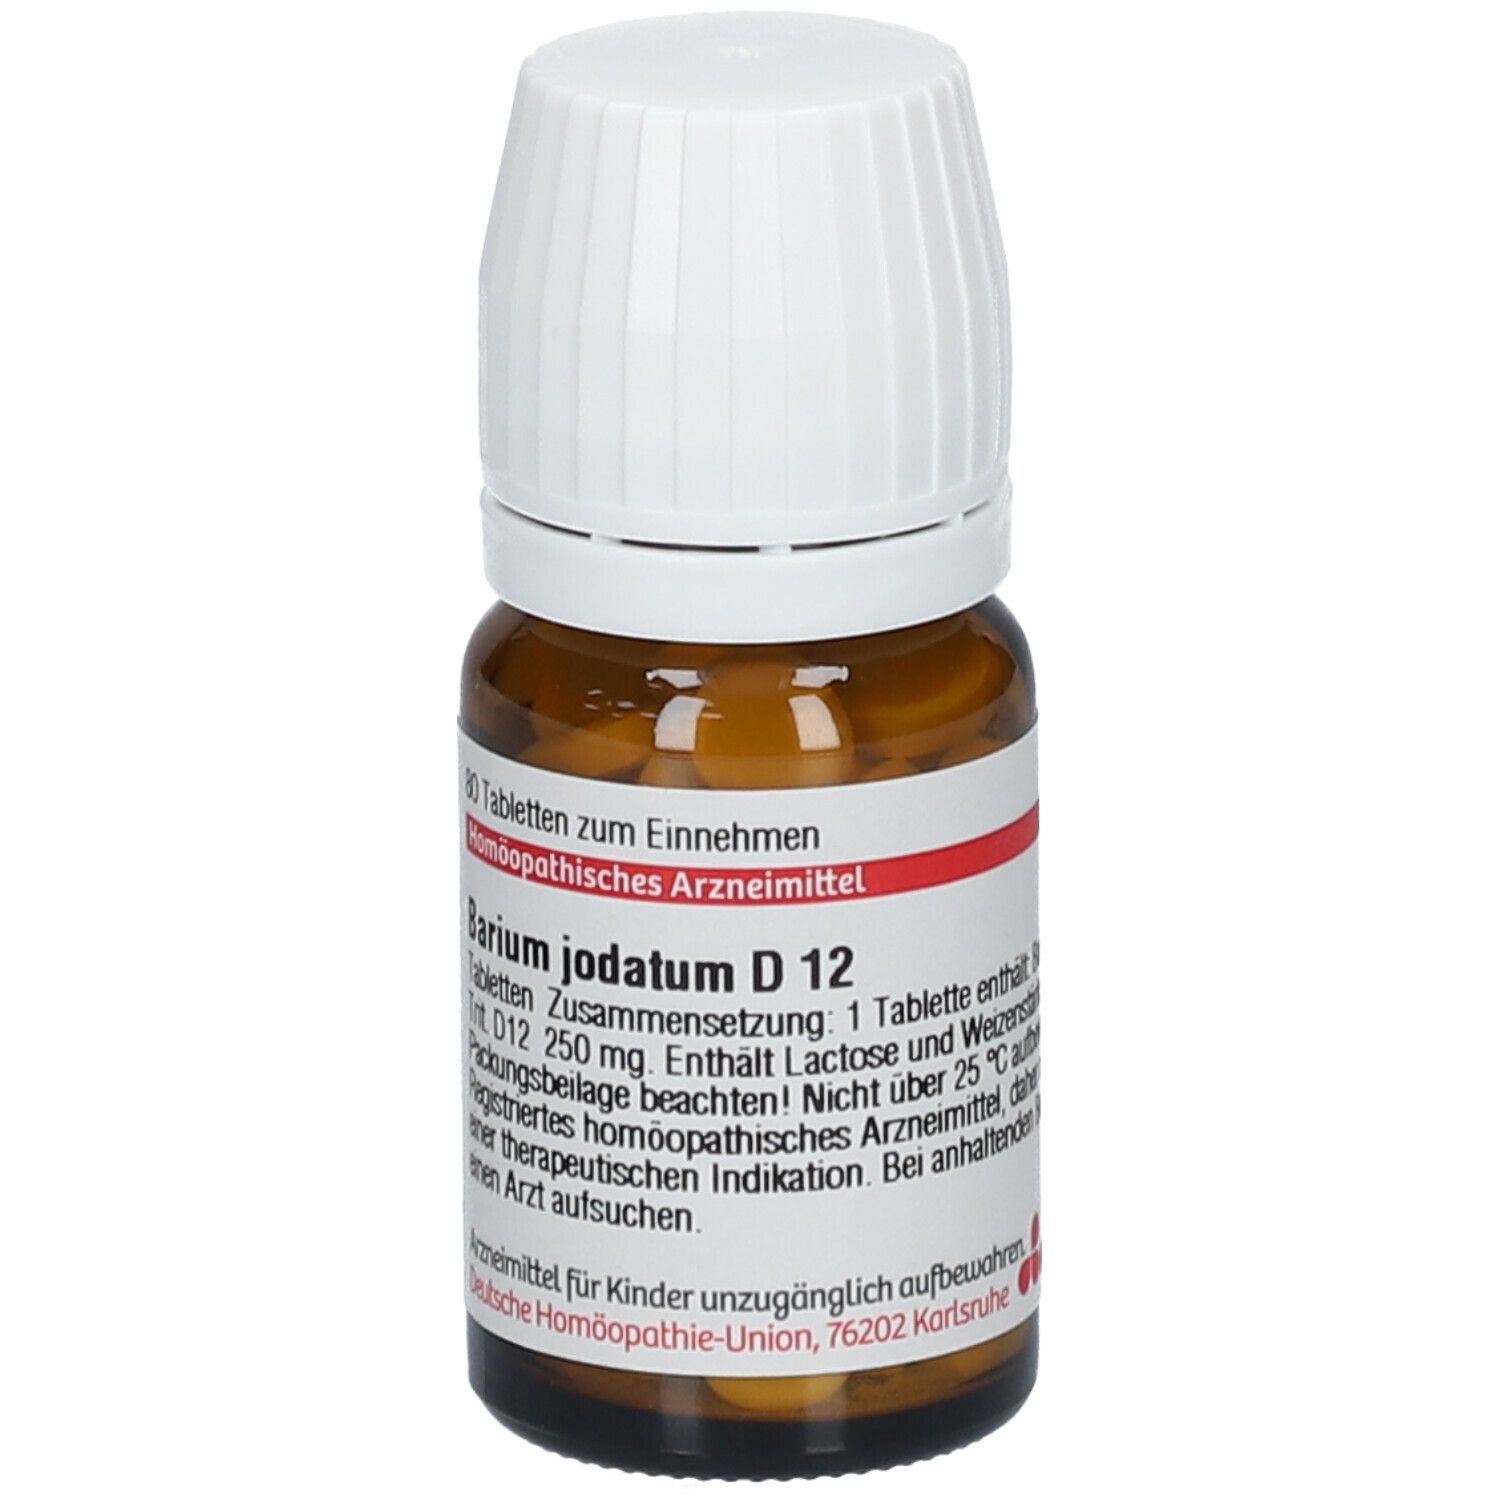 DHU Barium Jodatum D12